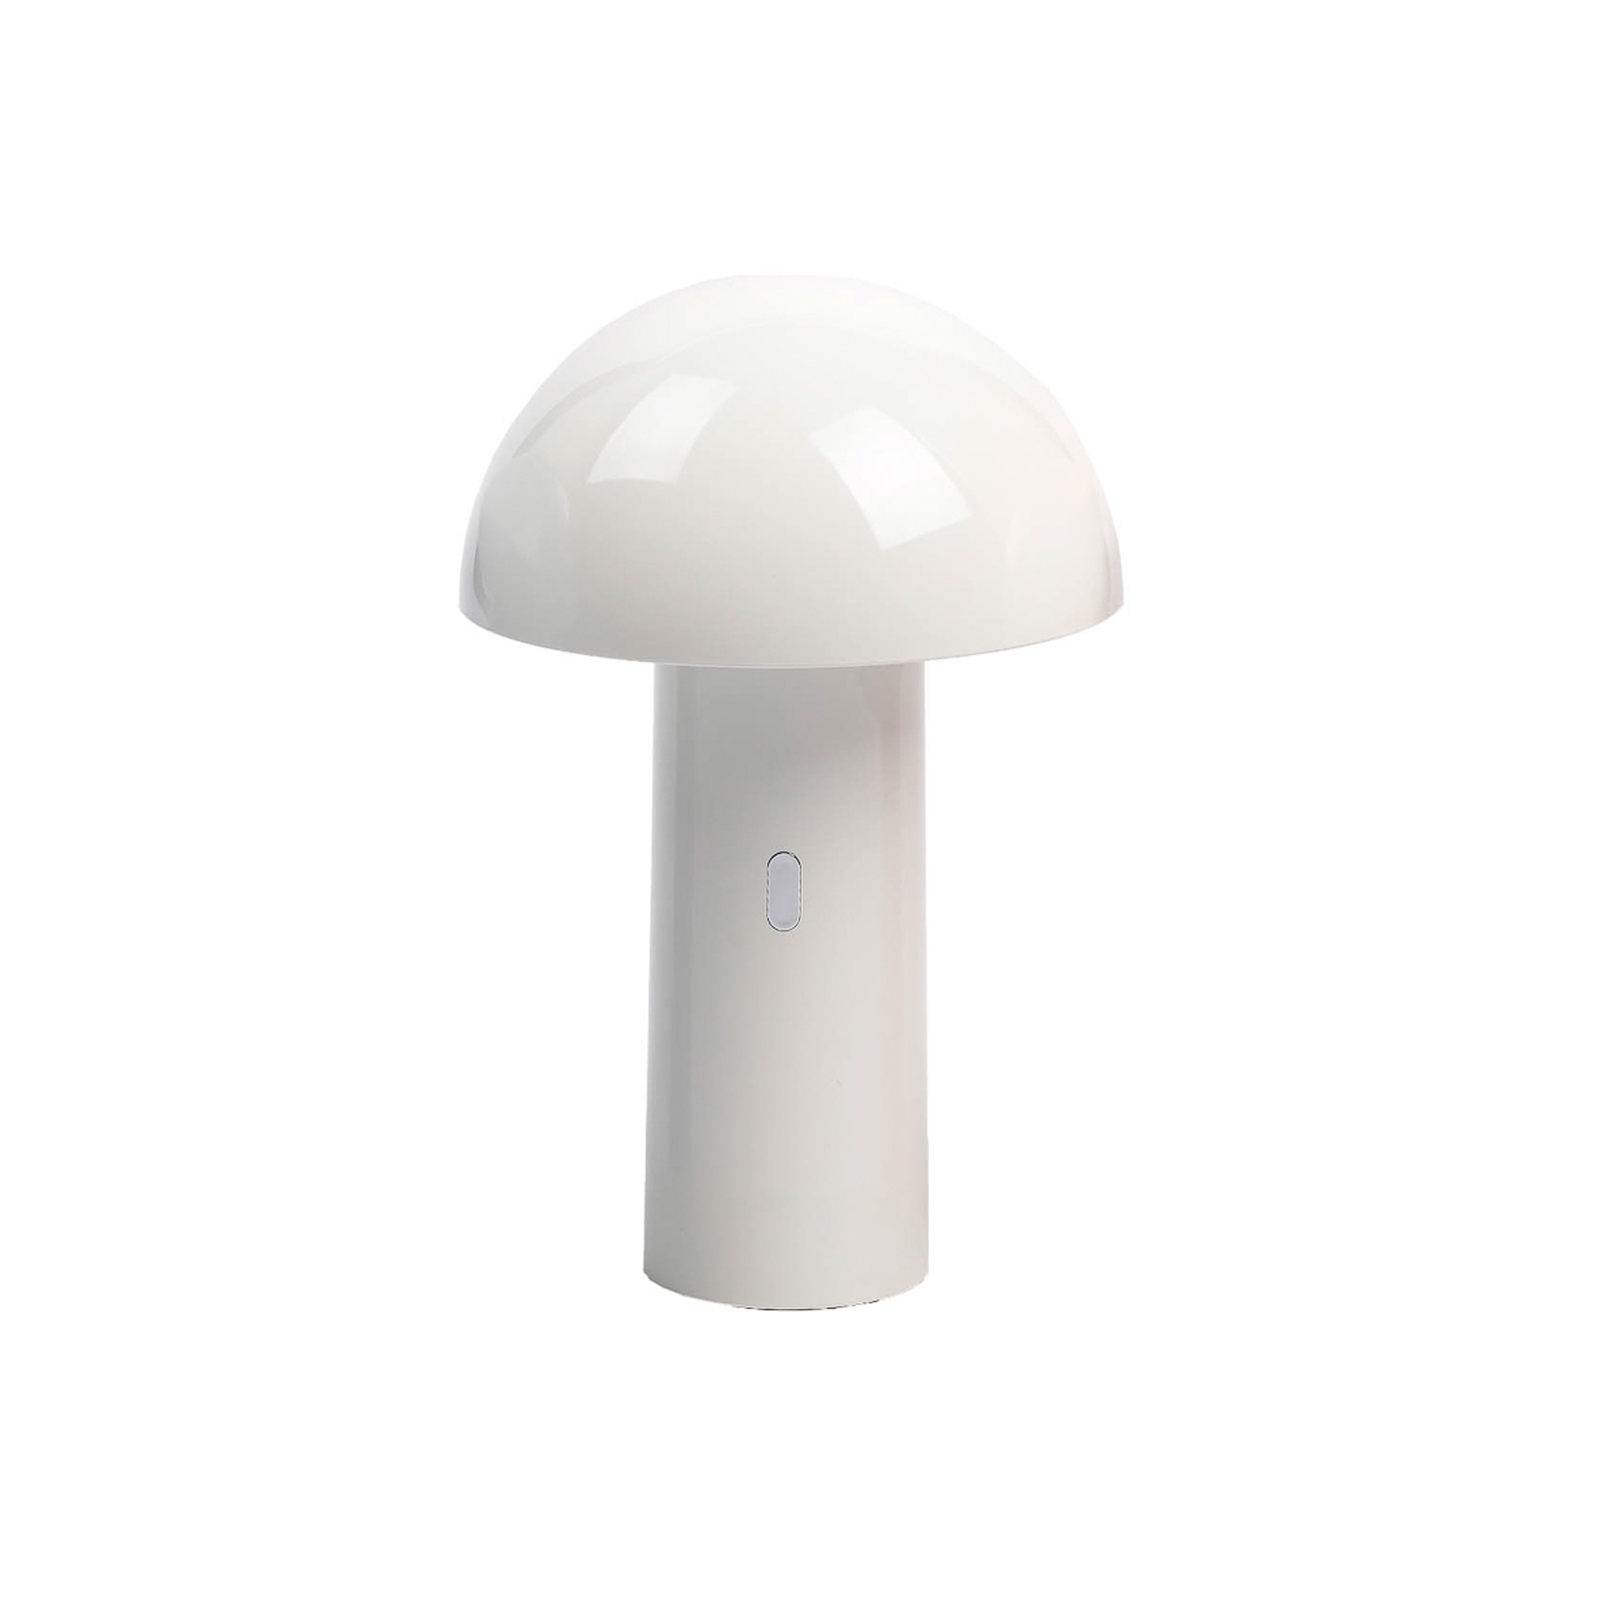 Aluminor Capsule LED-Tischlampe, mobil, weiß